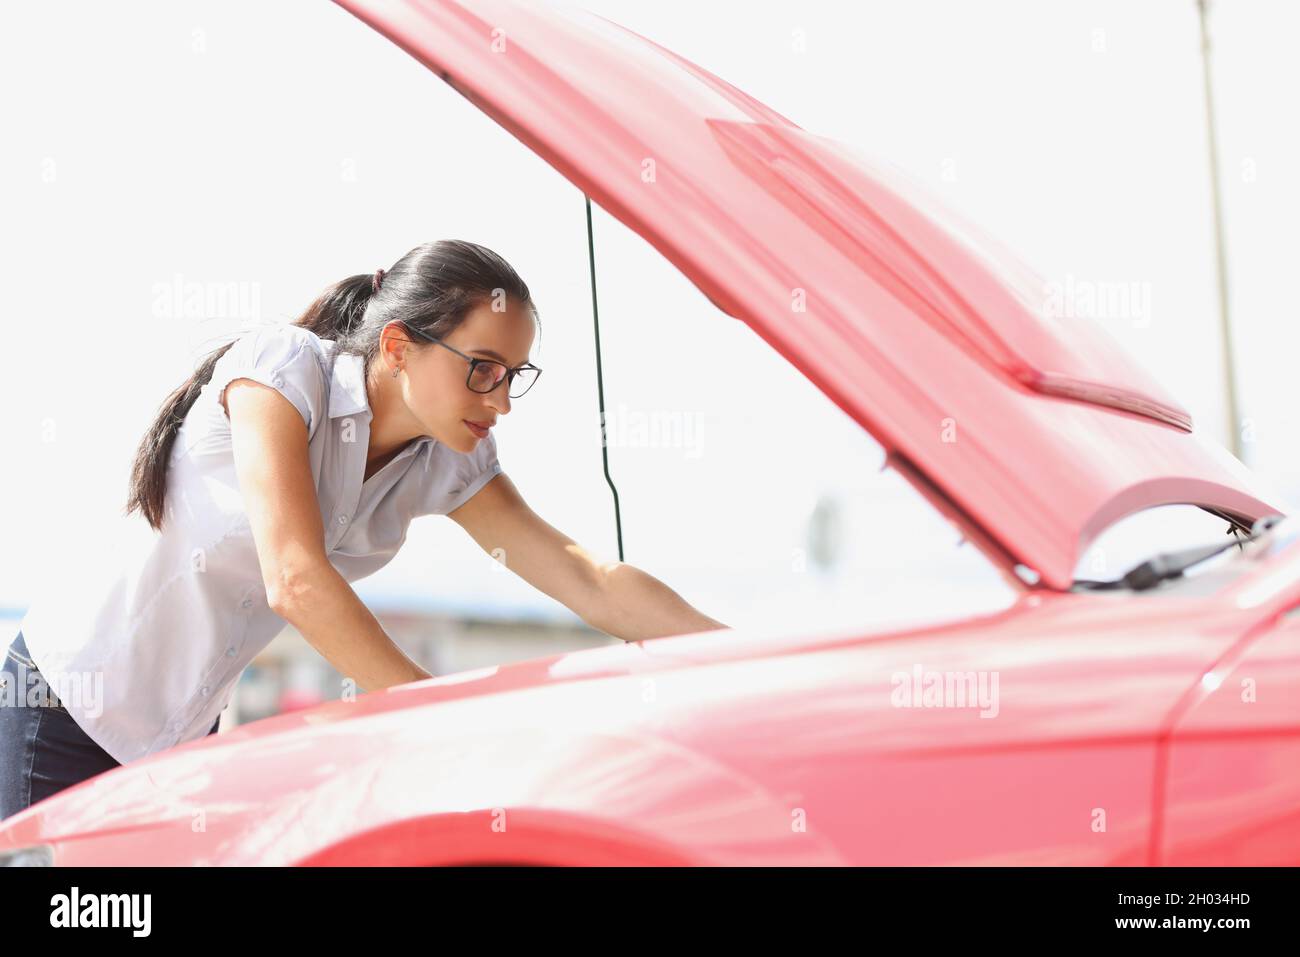 Focused woman looks at car engine closeup Stock Photo